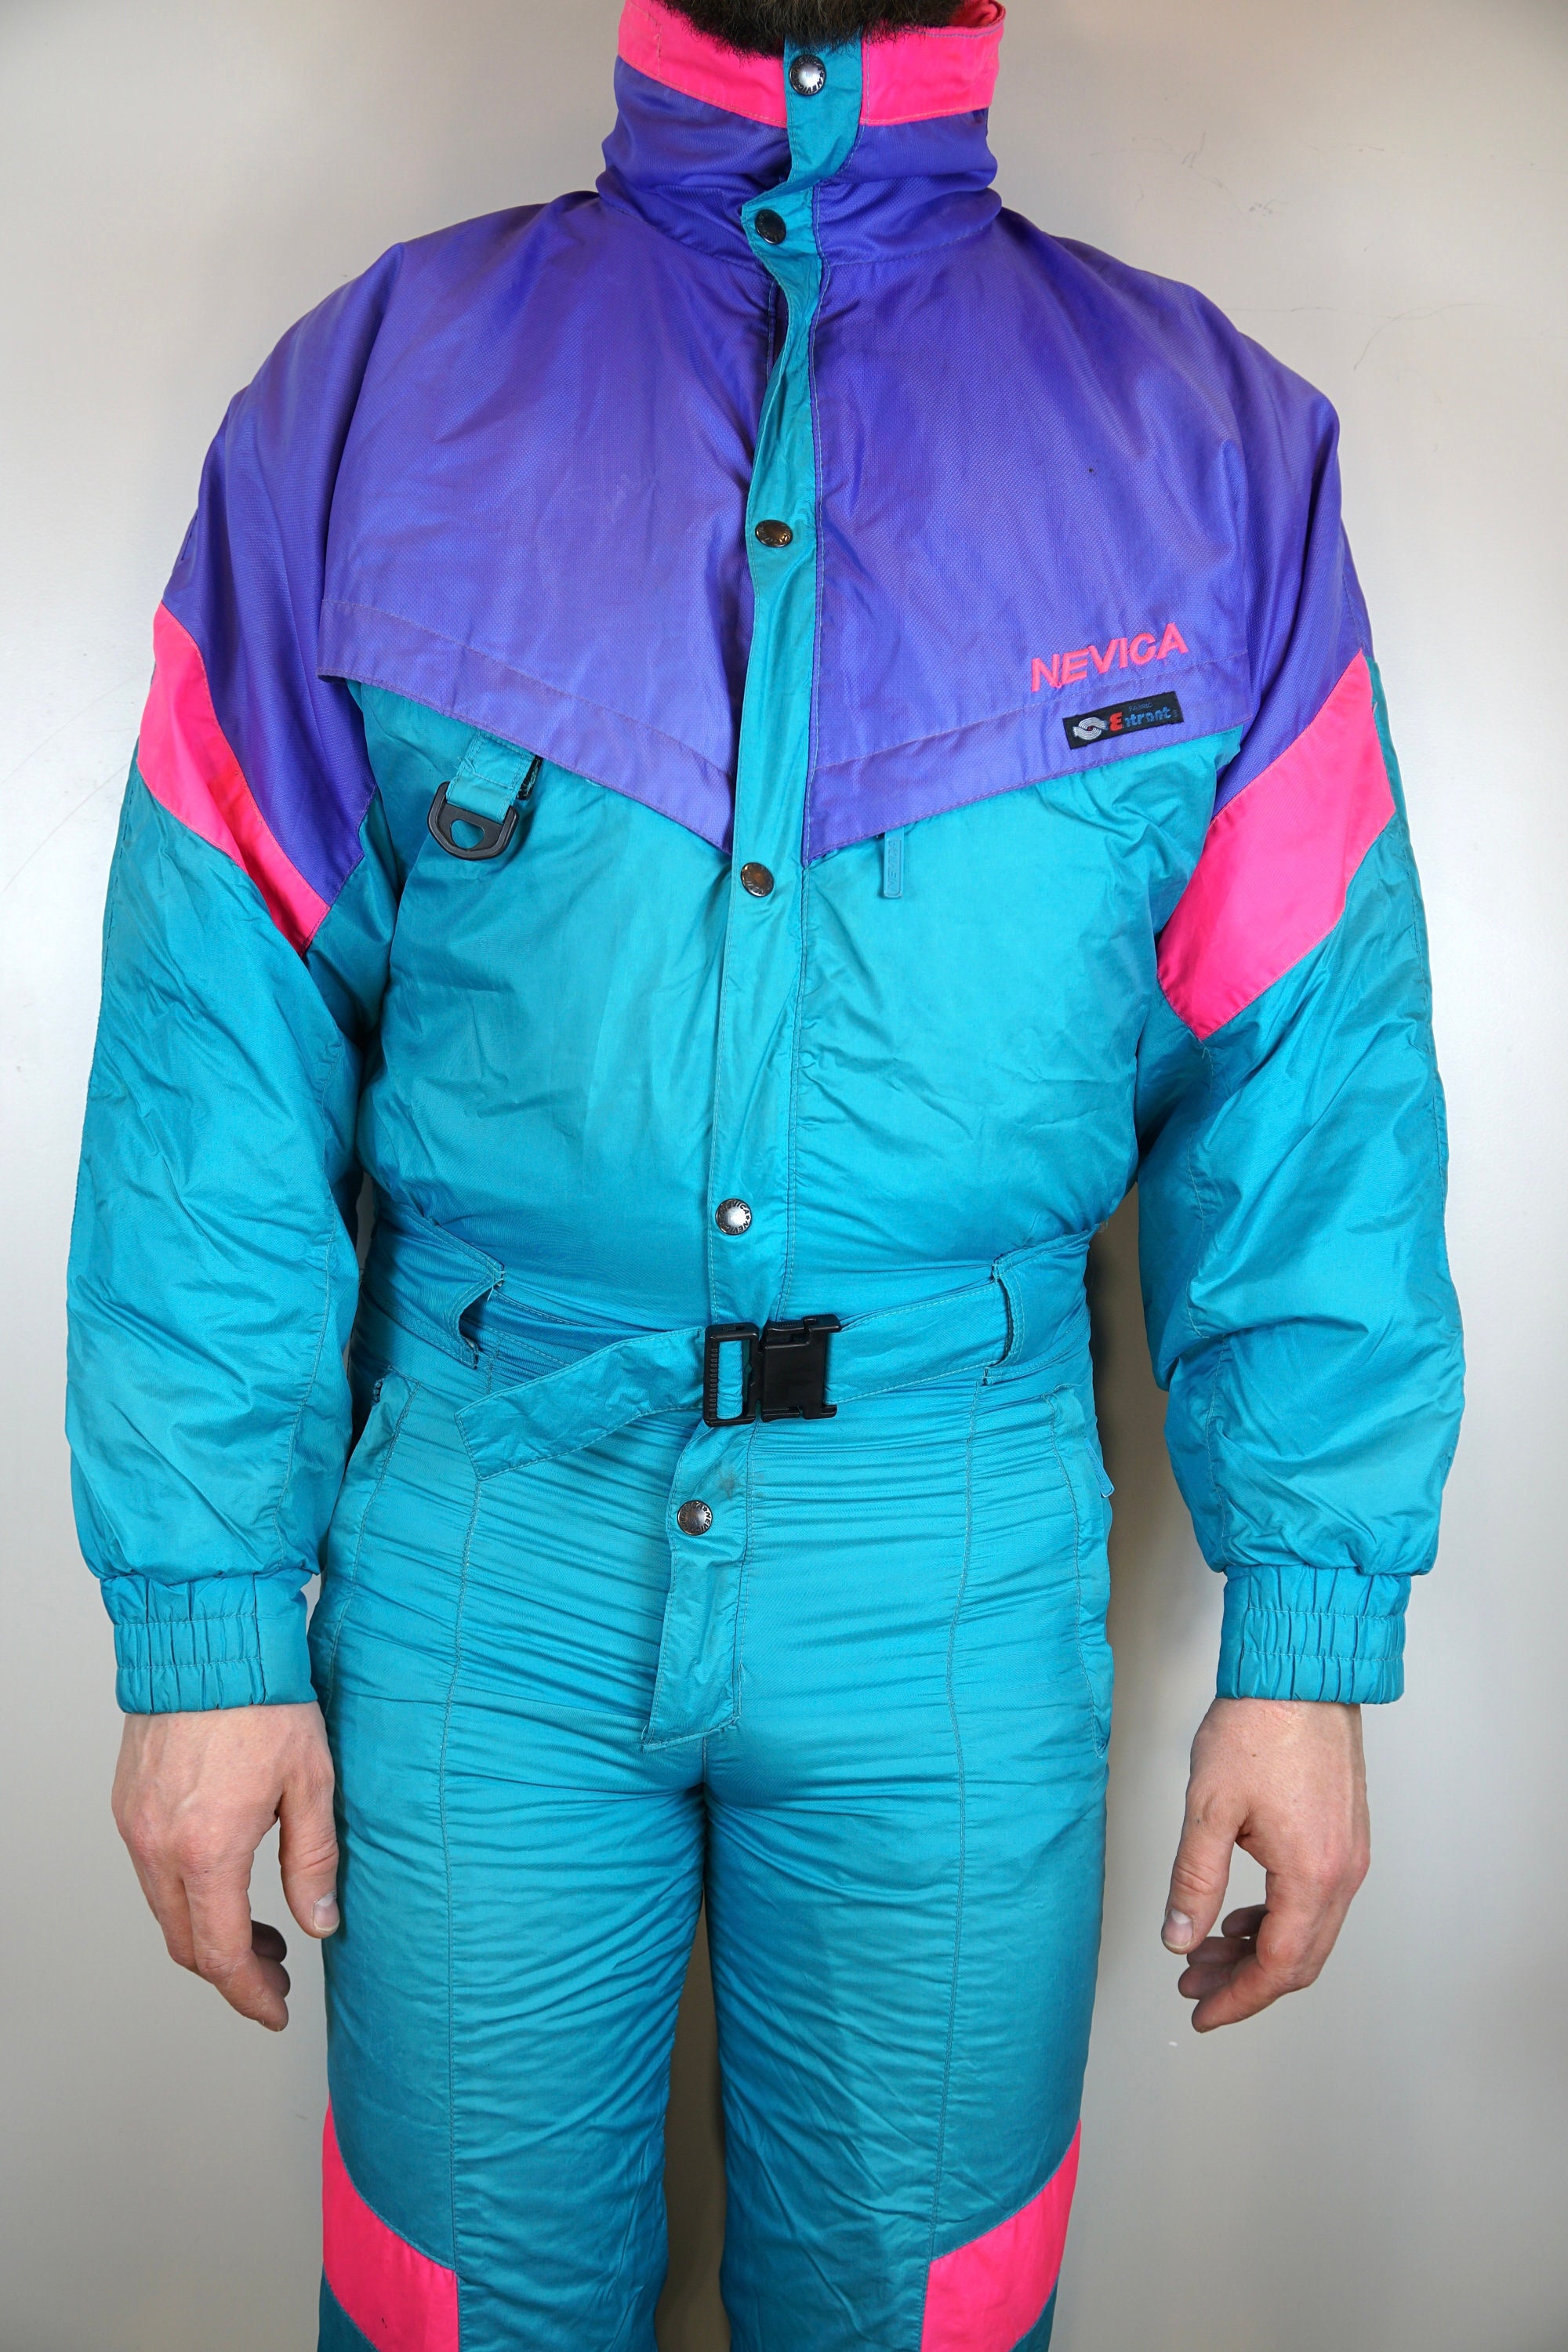 70s ski suit - Etsy France